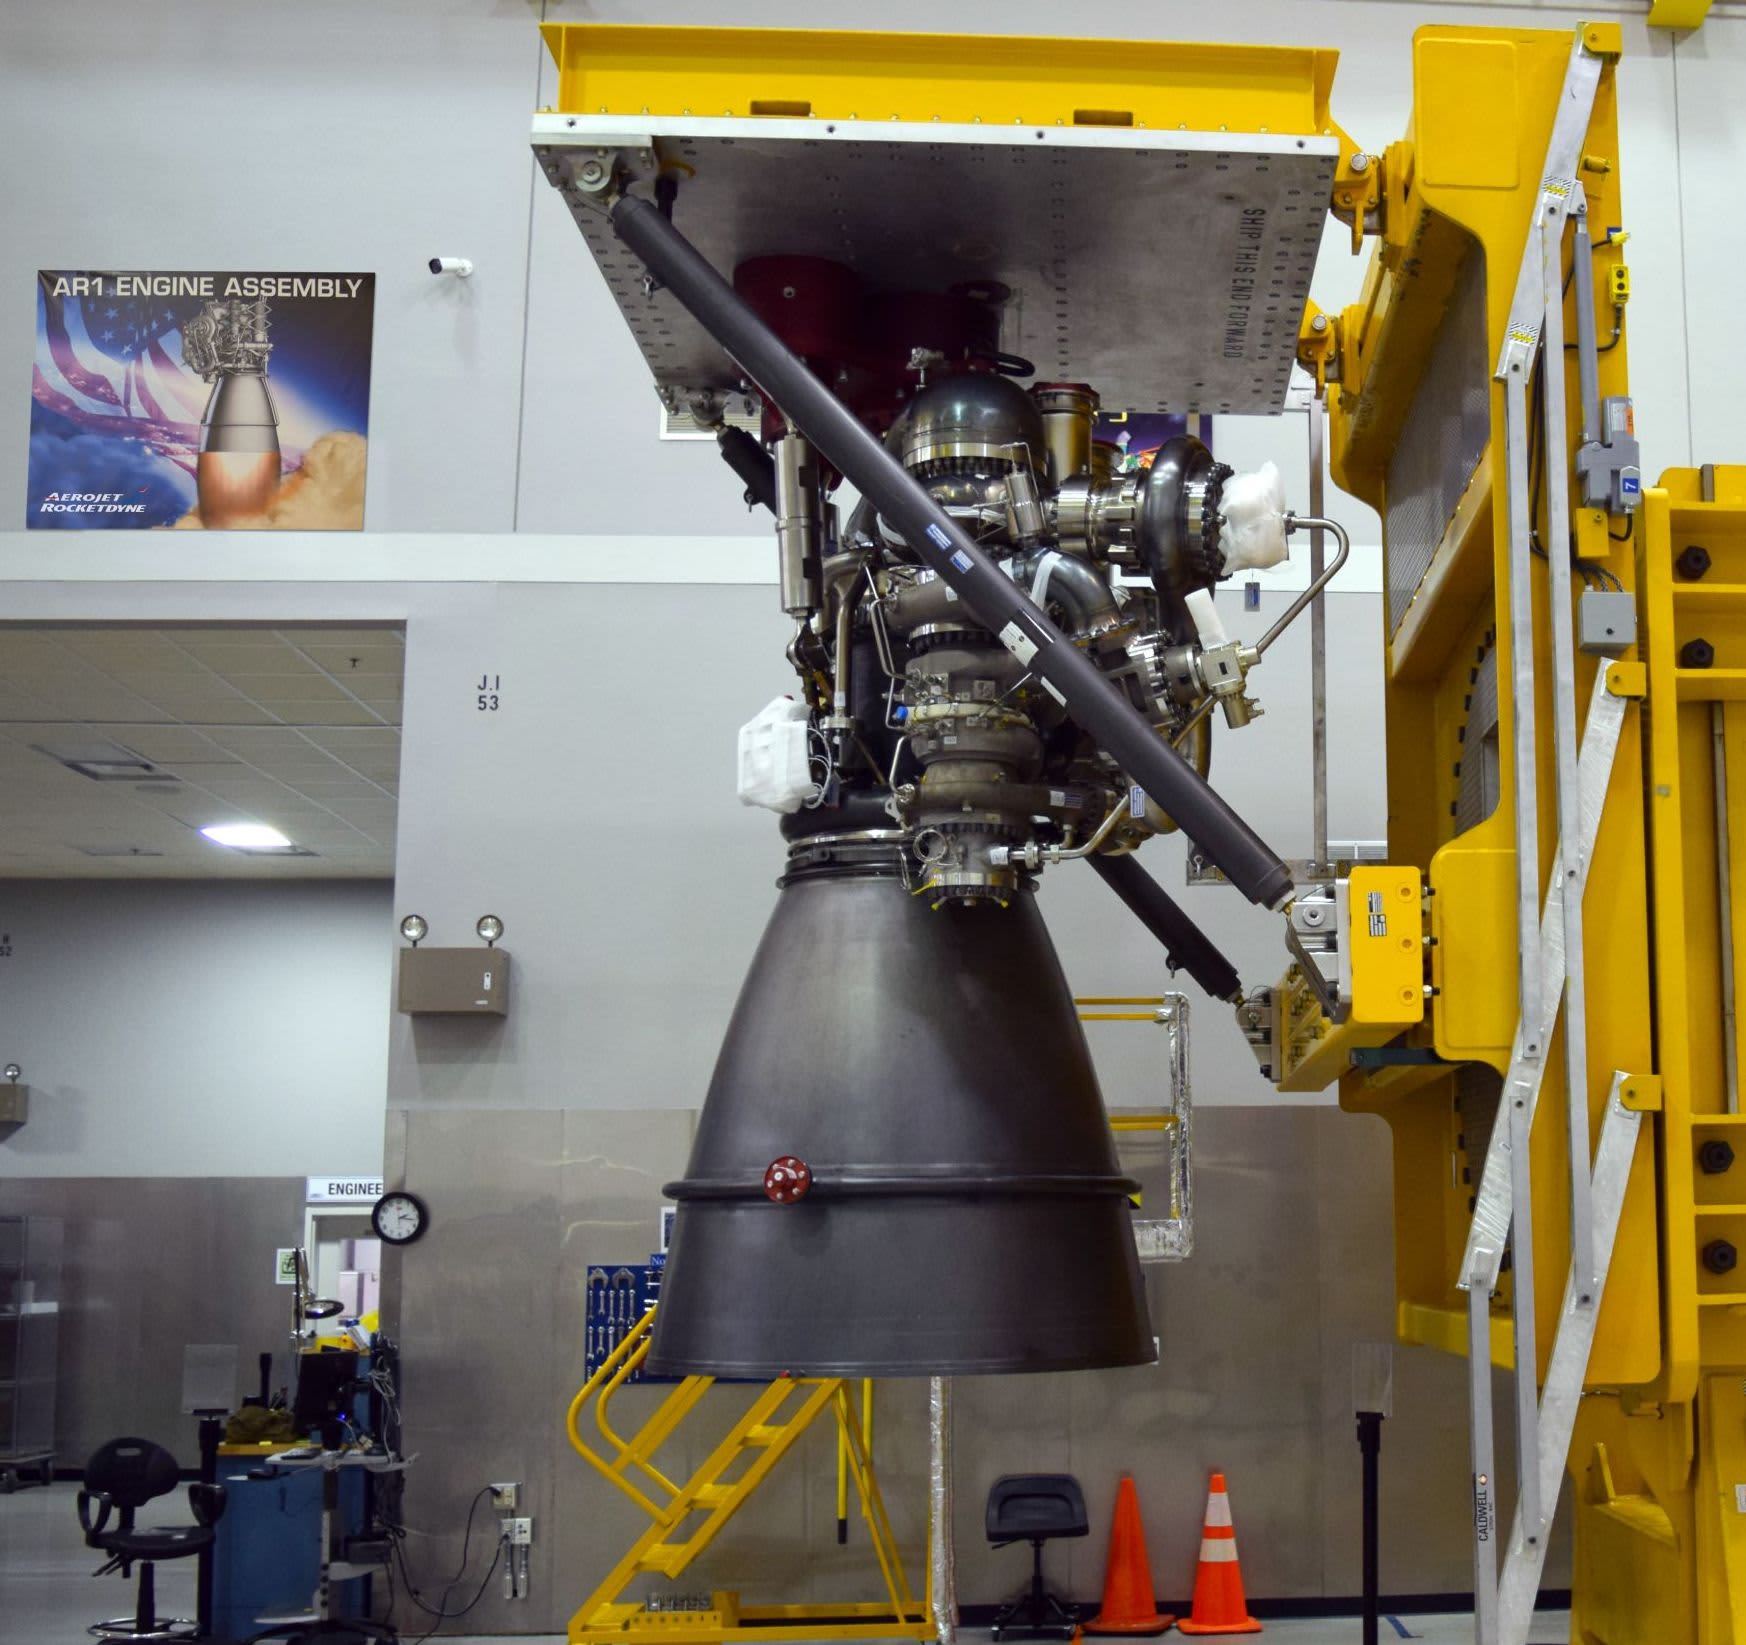 Aerojet Rocketdyne completes AR1 rocket engine, will not hearth till ‘late 2022’